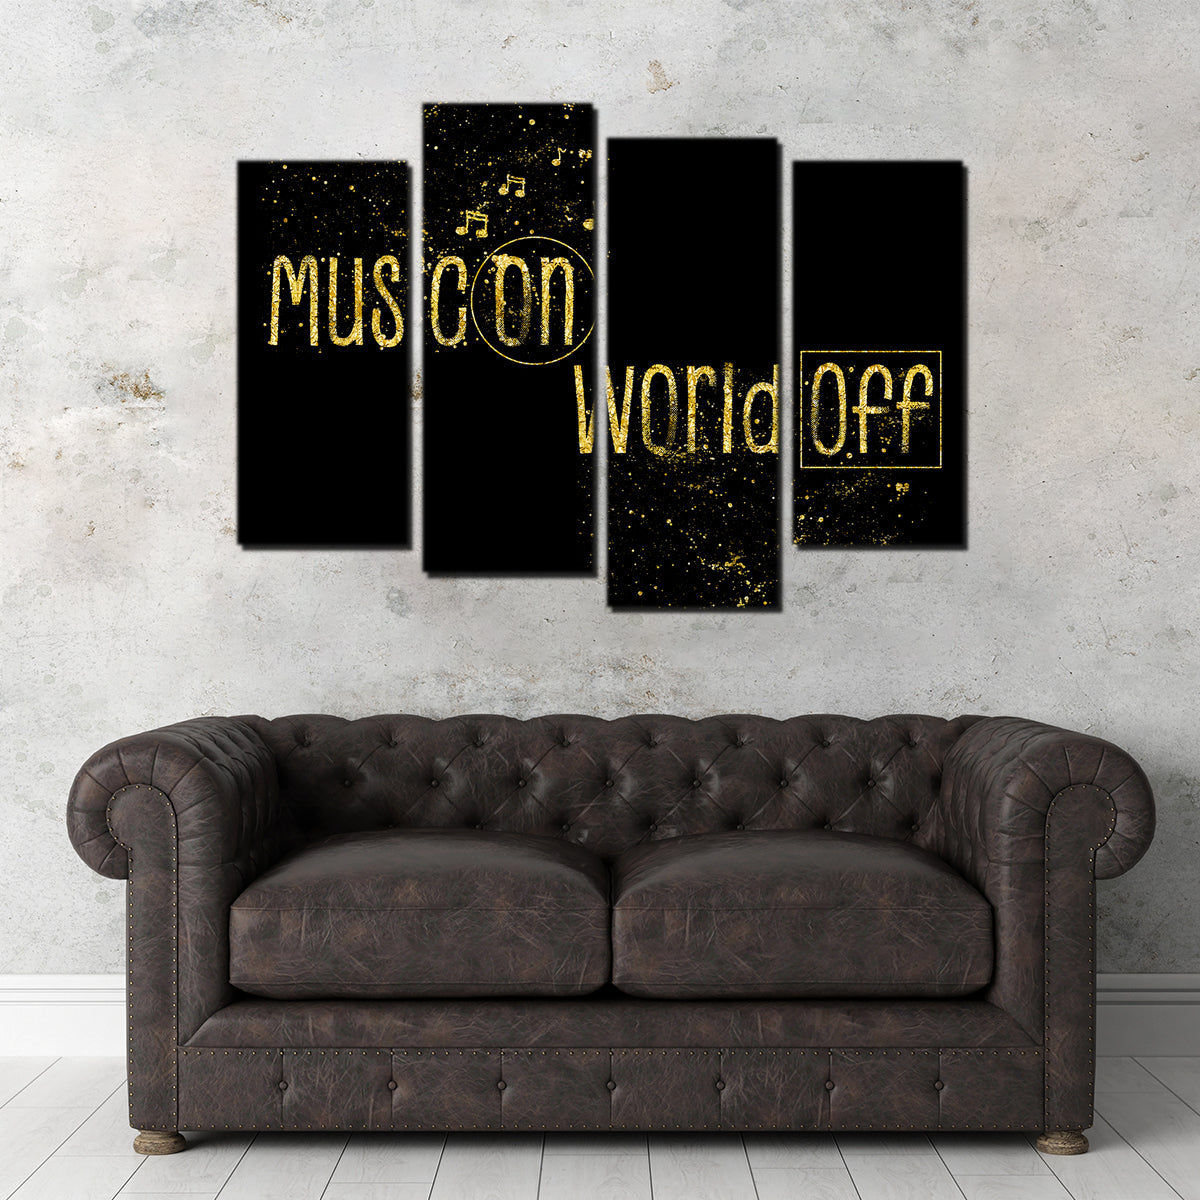 Music On – World Off